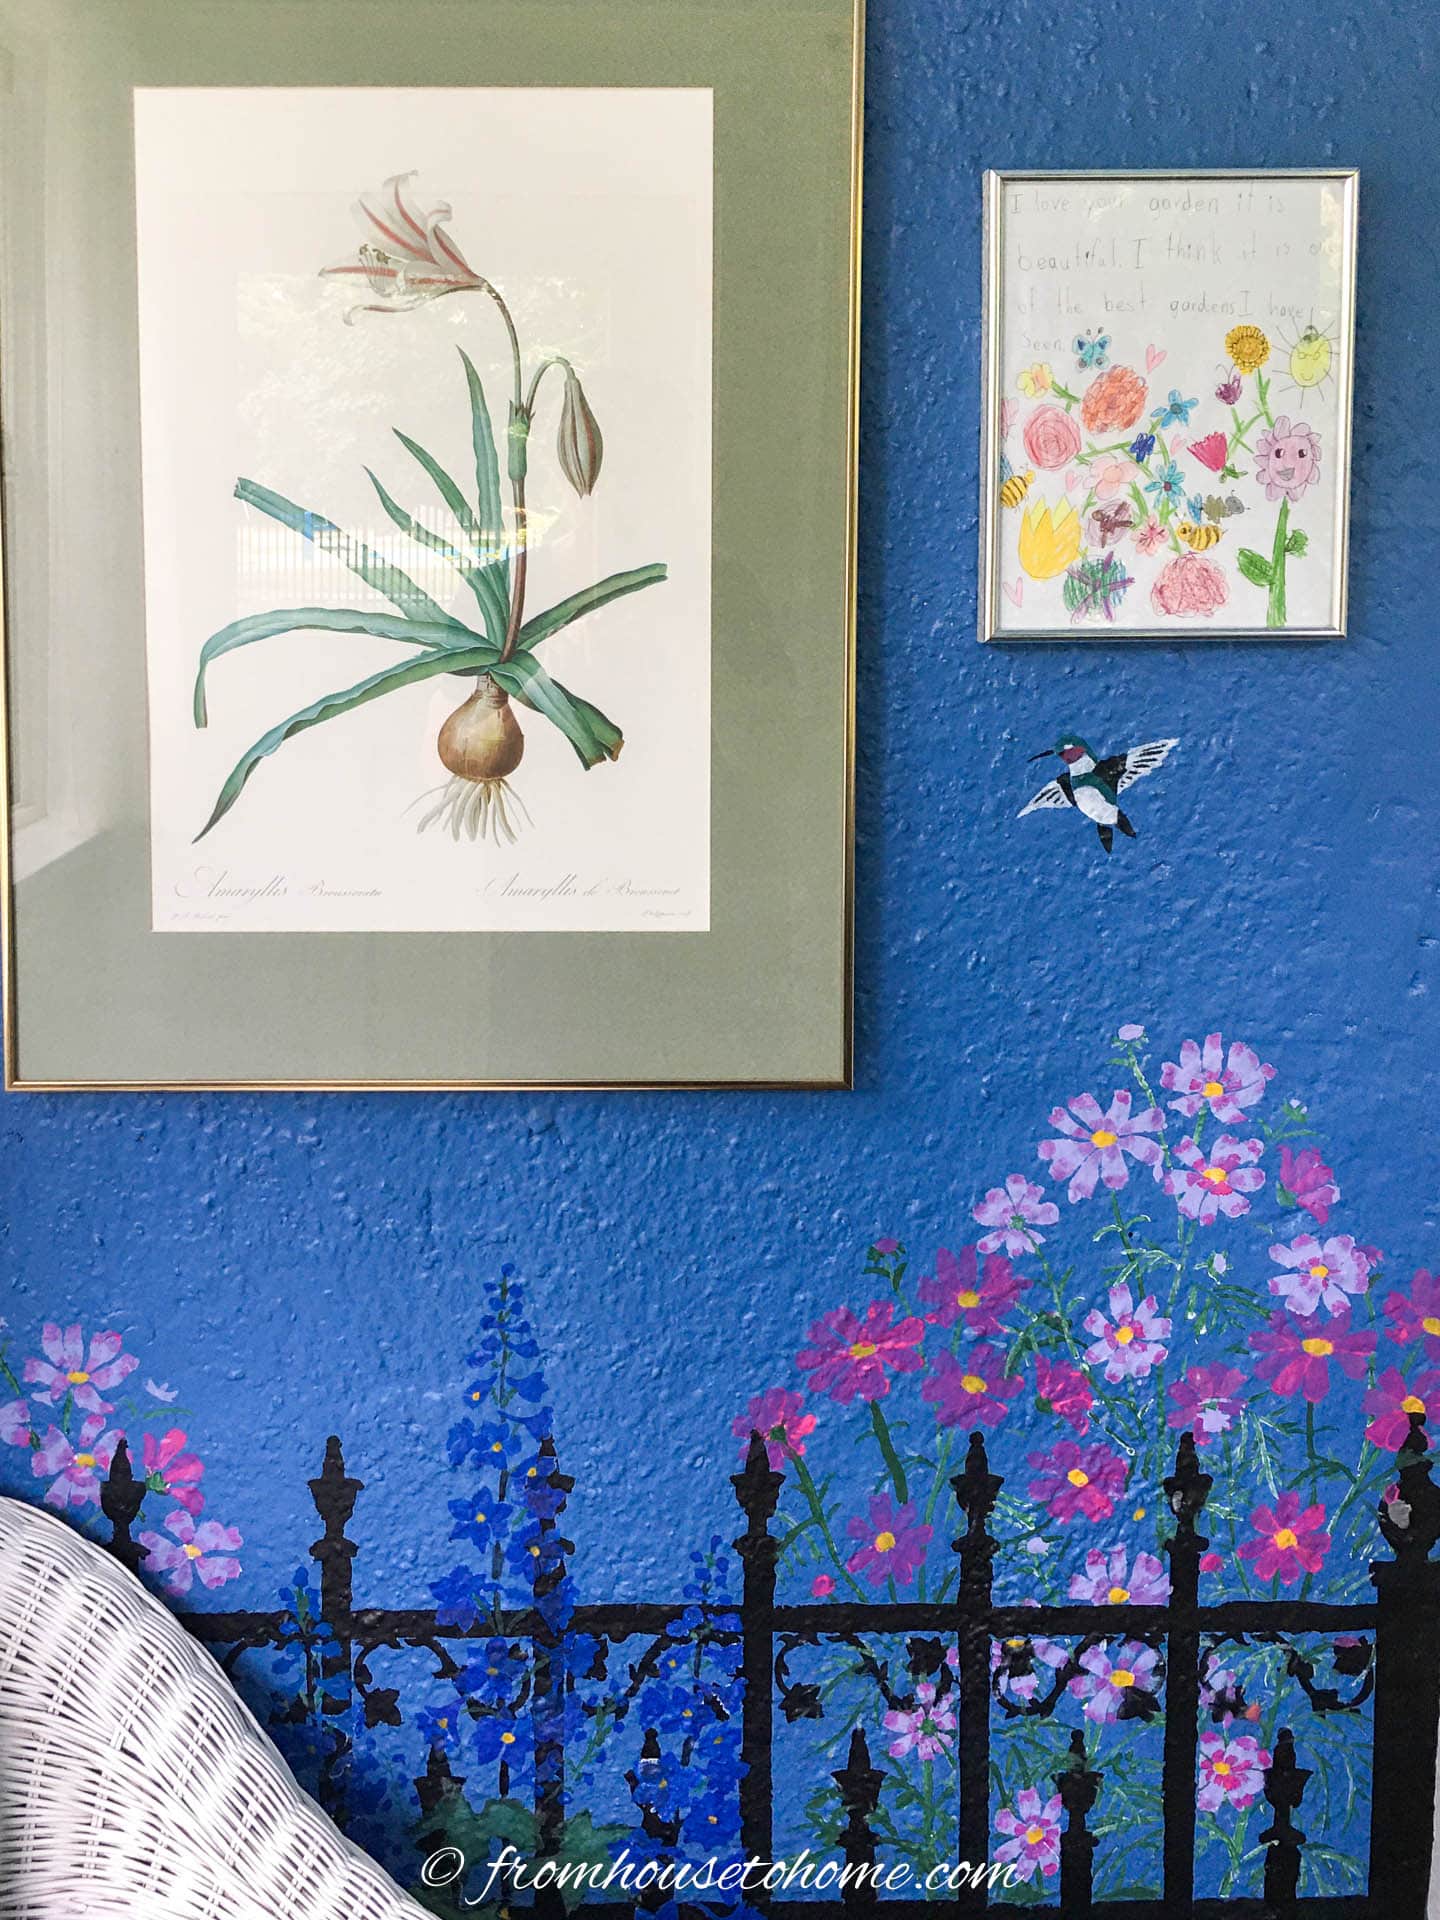 A dark blue wall with floral artwork above a stenciled garden scene